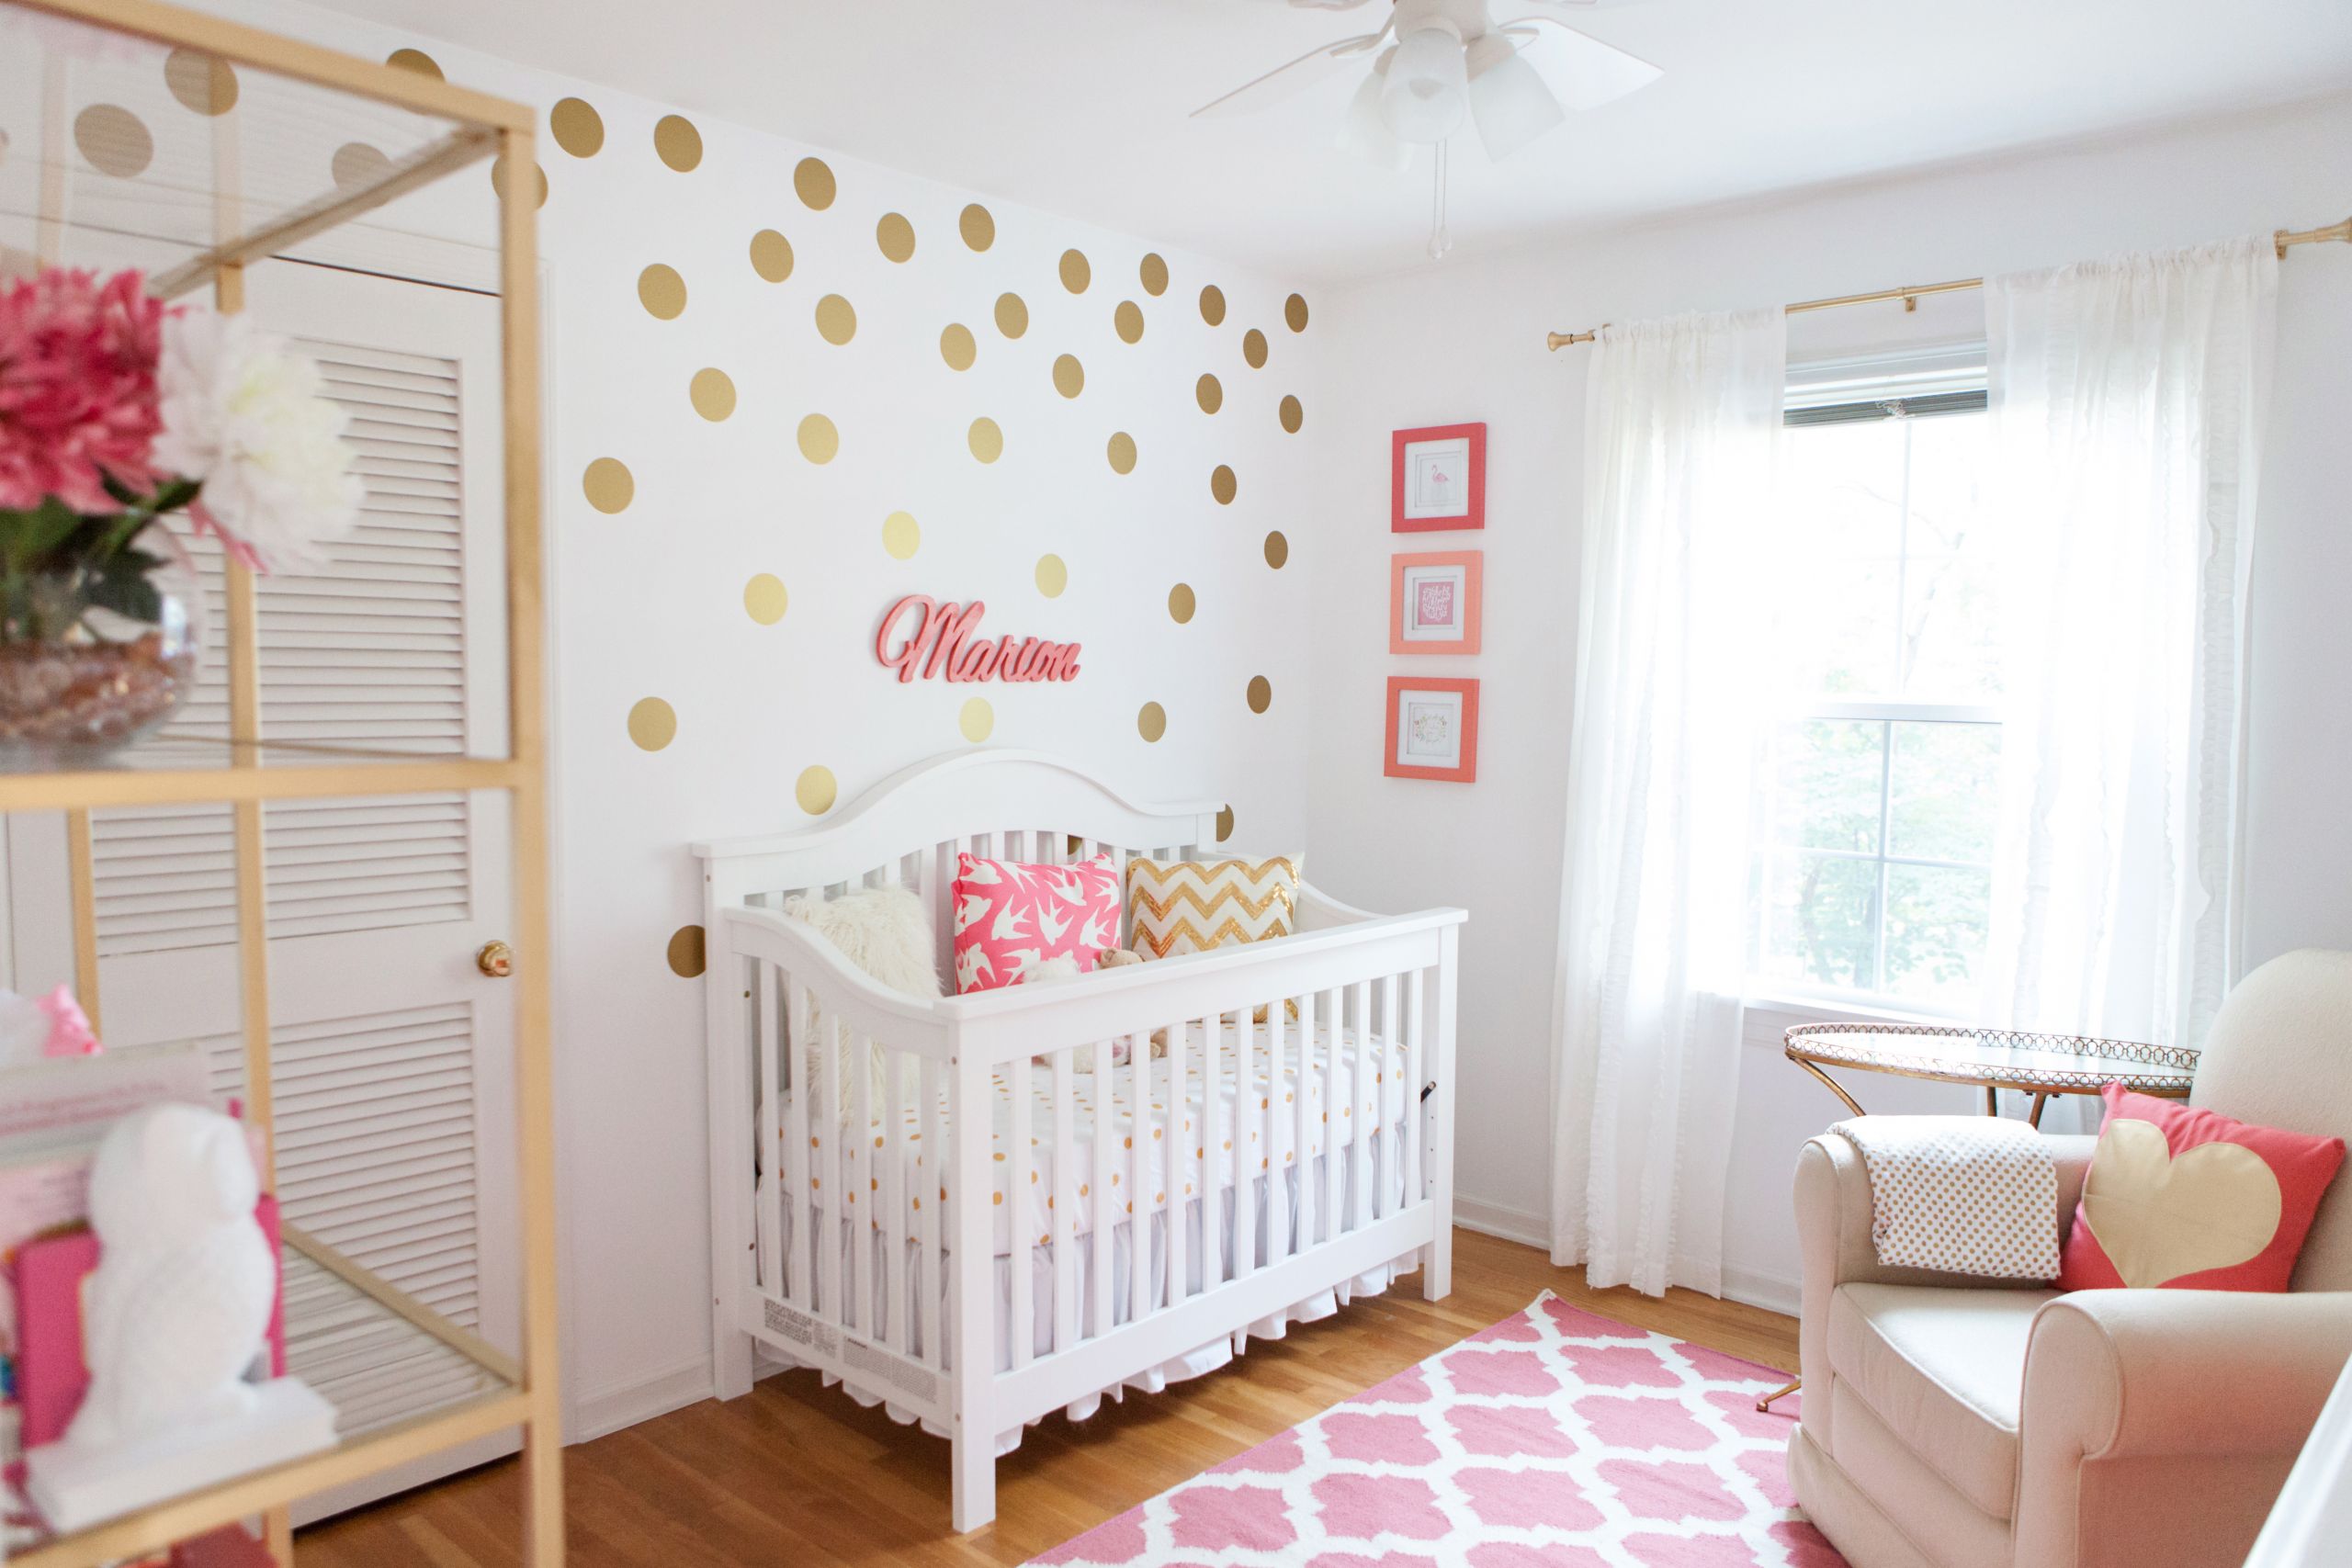 Baby Girl Nursery Decor
 Marion s Coral and Gold Polka Dot Nursery Project Nursery